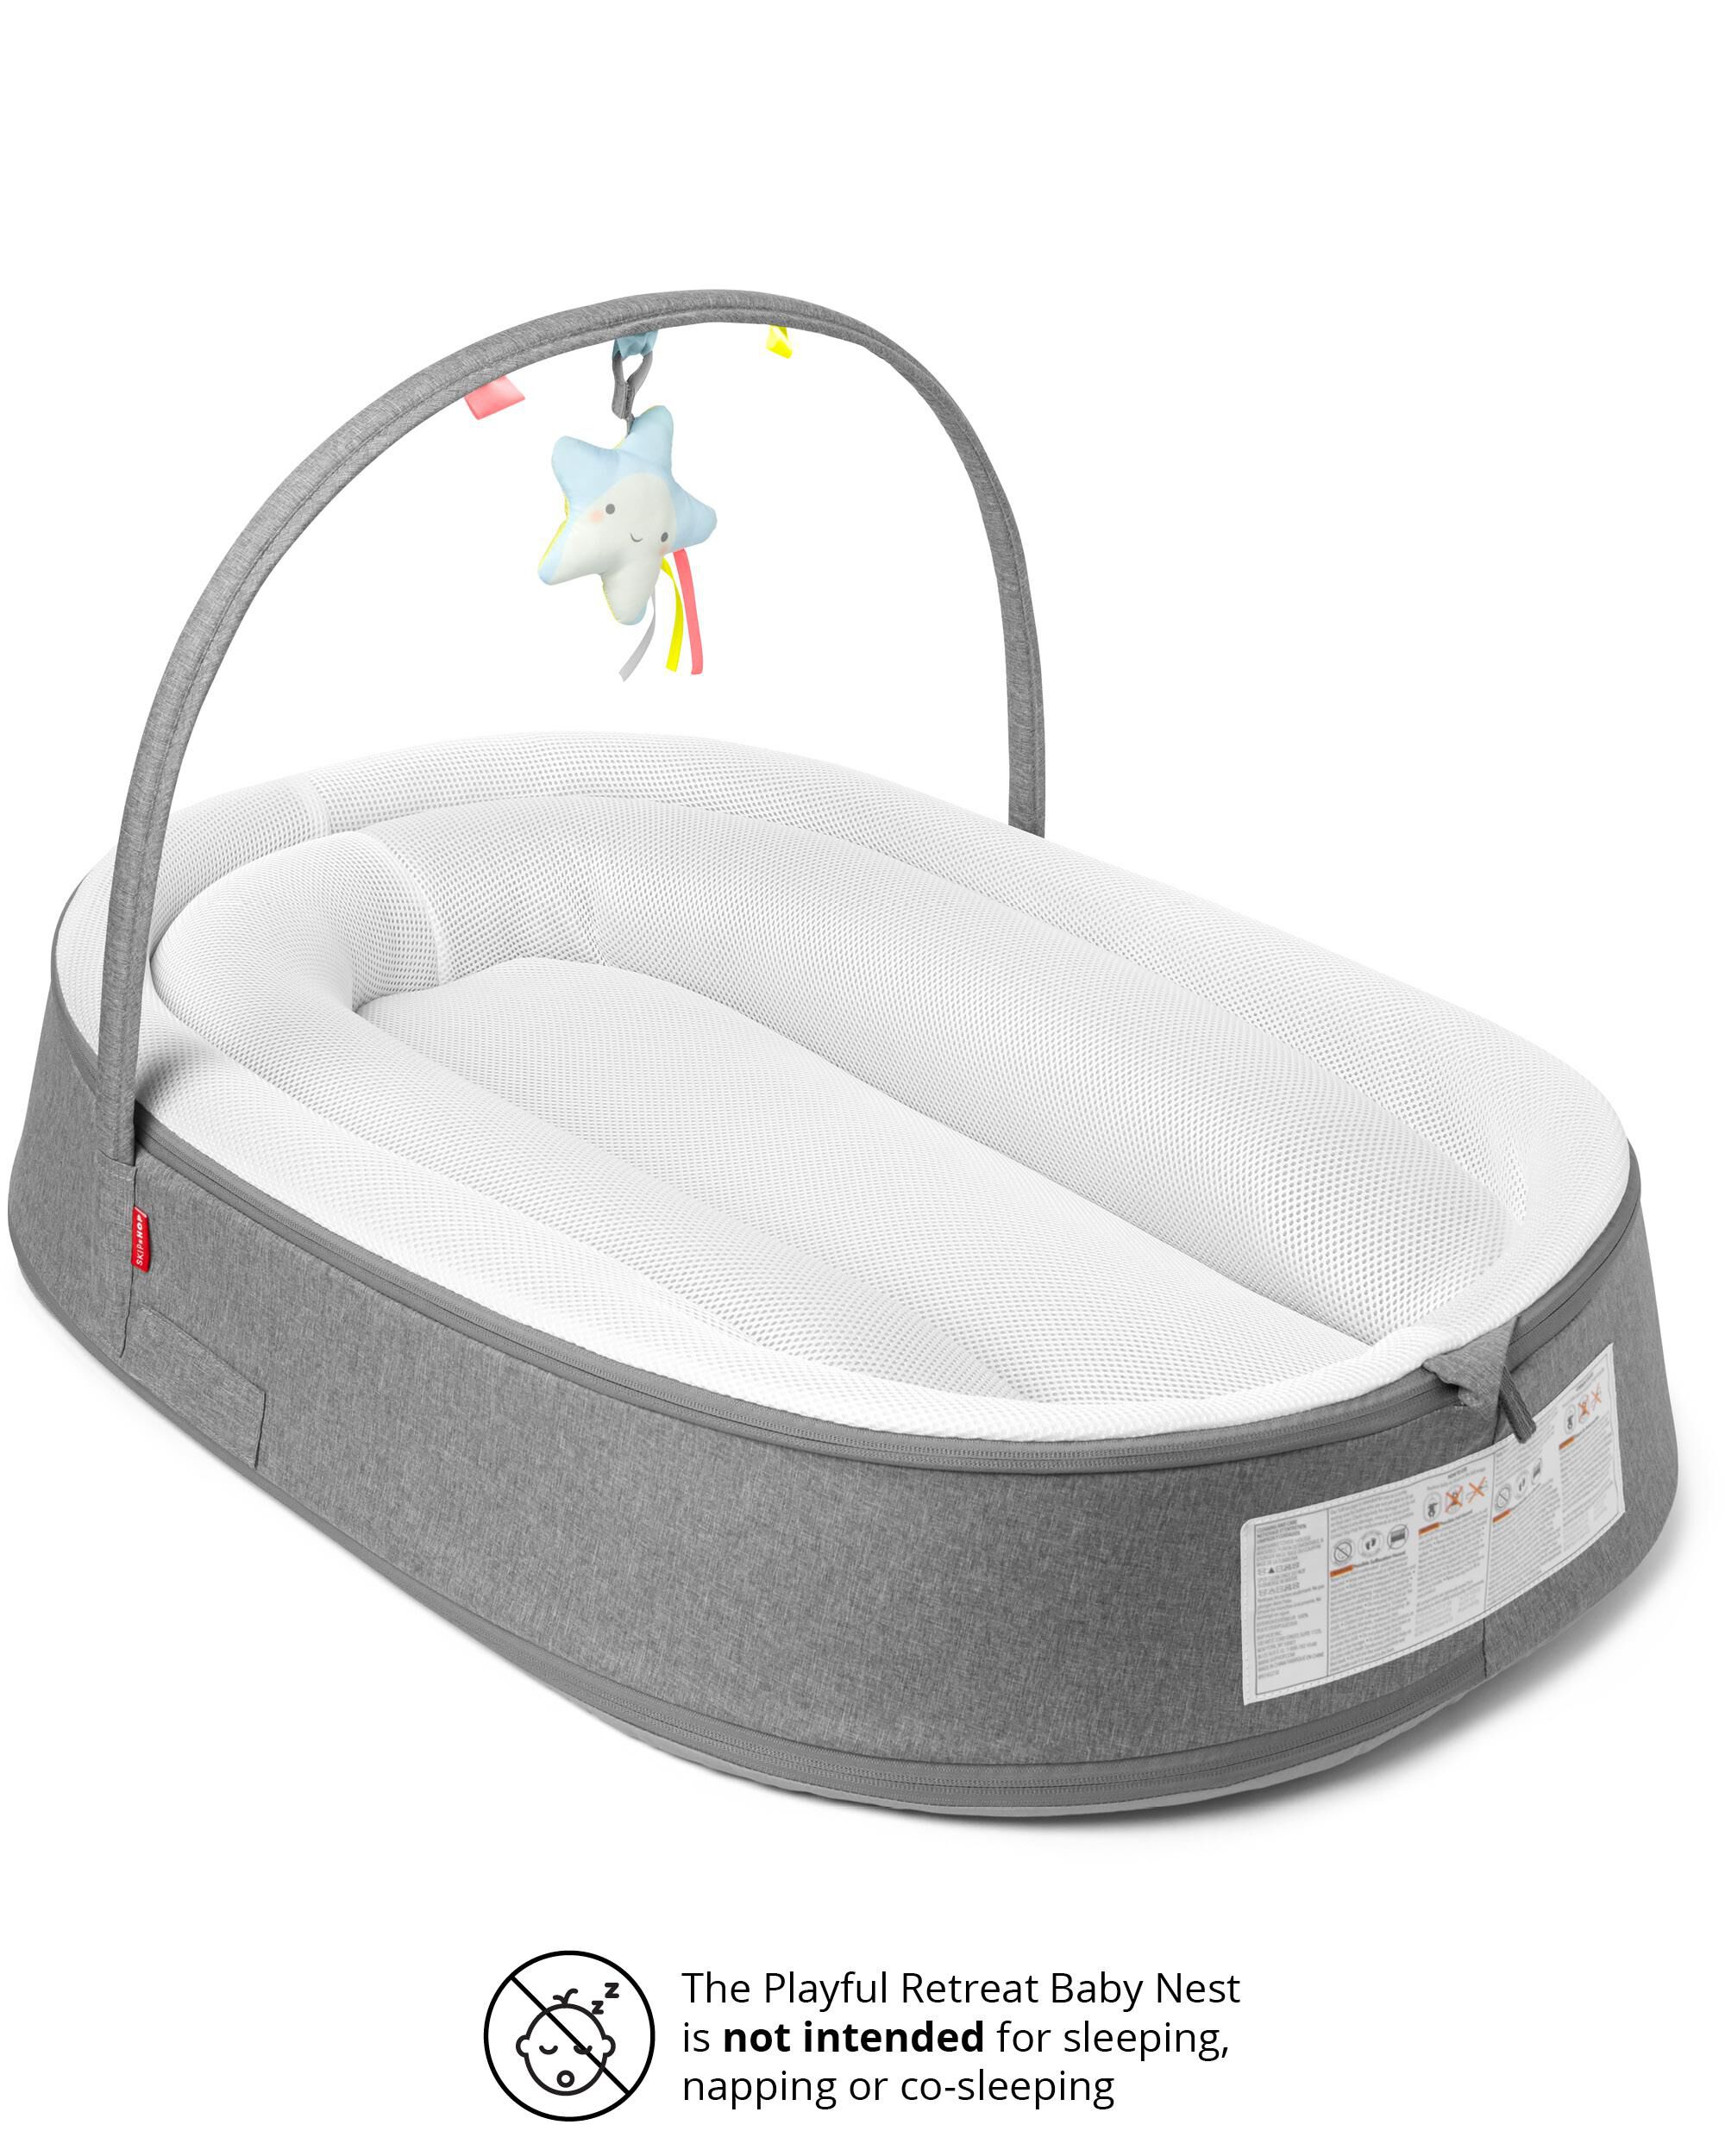 Carters Playful Retreat Baby Nest - Grey Melange